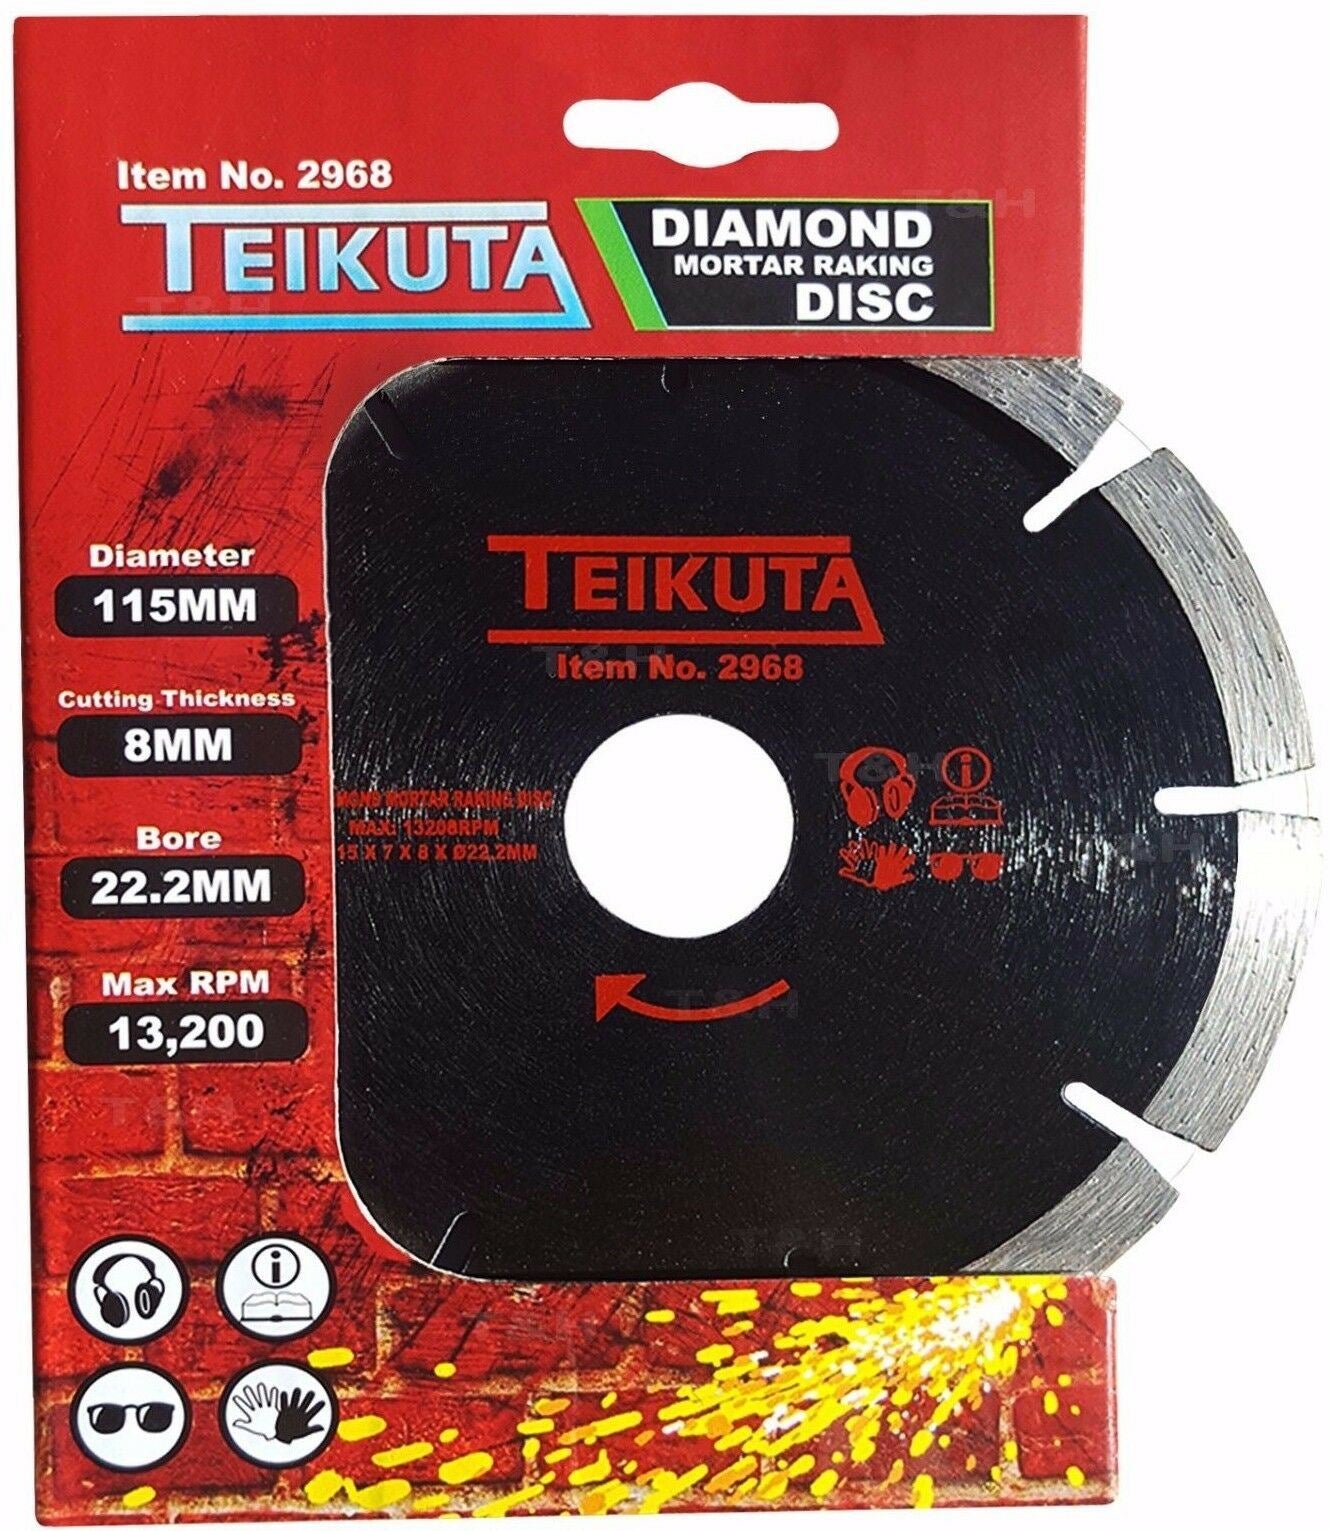 TEIKUTA 4.5" ( 115MM ) DIAMOND MORTAR RAKING DISC ( X 10 )